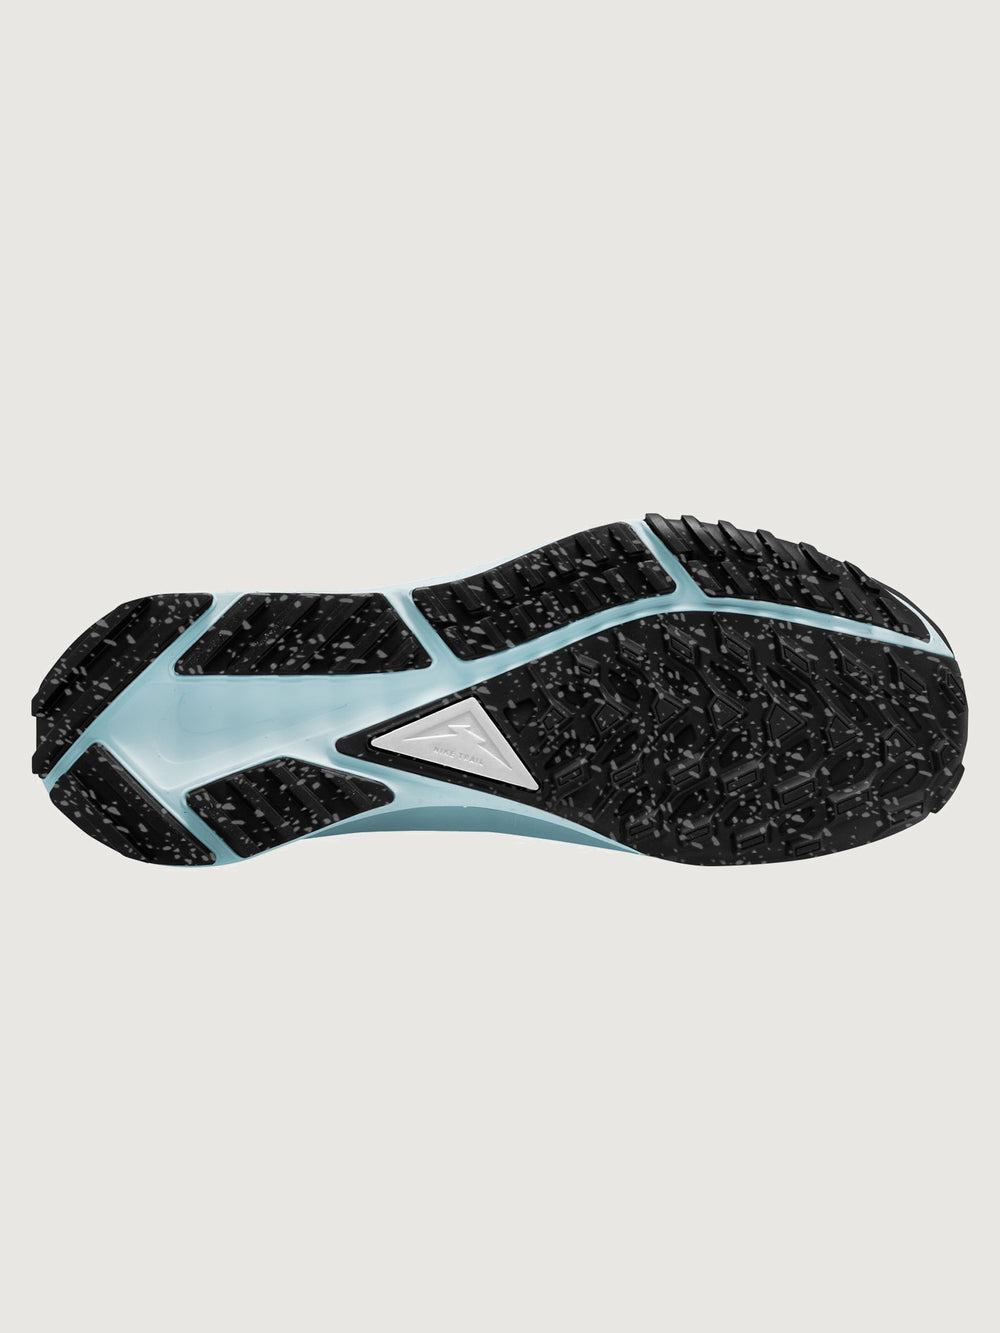 Nike Pegasus Trail 4 GORE-TEX - LT Smoke Grey/Black-Glacier Blue